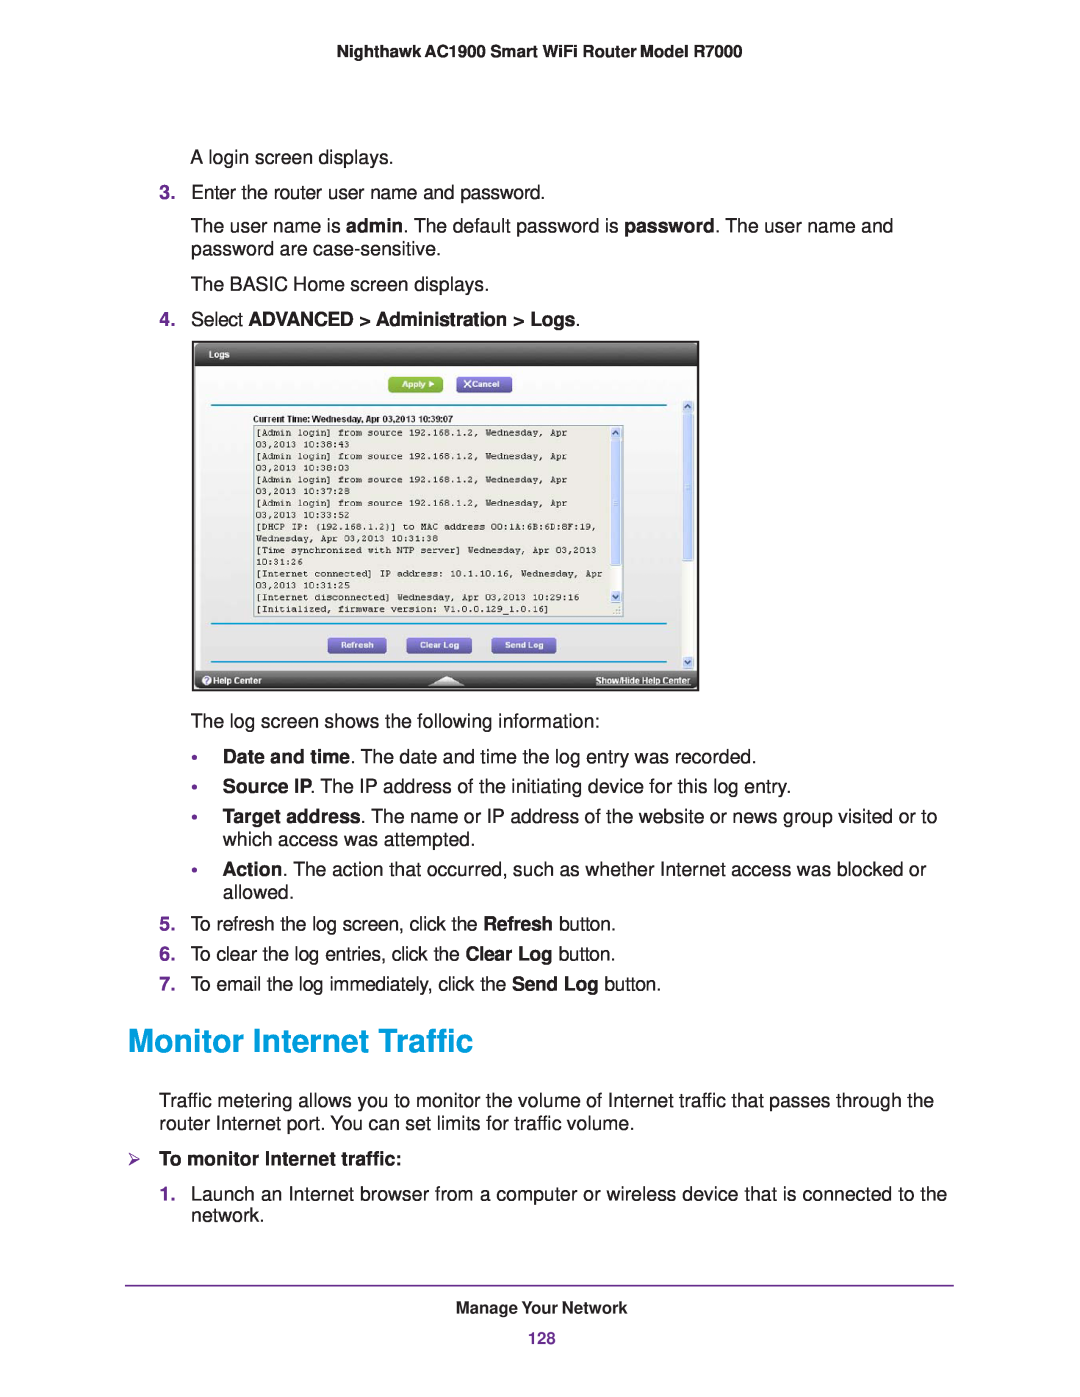 NETGEAR R7000 user manual Monitor Internet Traffic, Select ADVANCED Administration Logs,  To monitor Internet traffic 